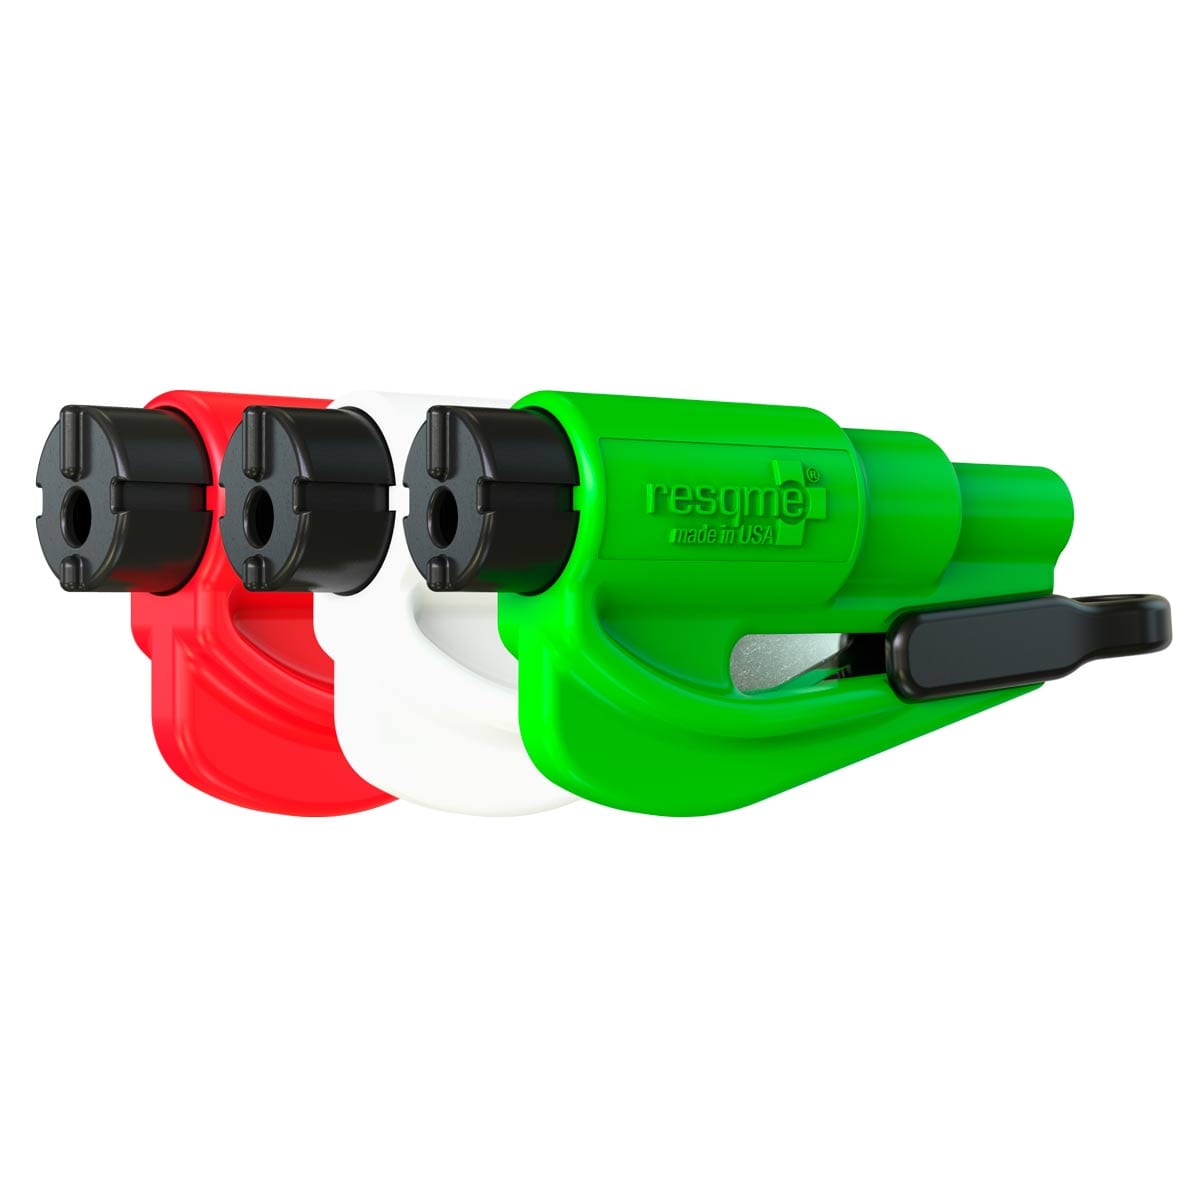 resqme® Car Escape Tool, Seatbelt Cutter / Window Breaker - Pack of 3 Red, White & Green